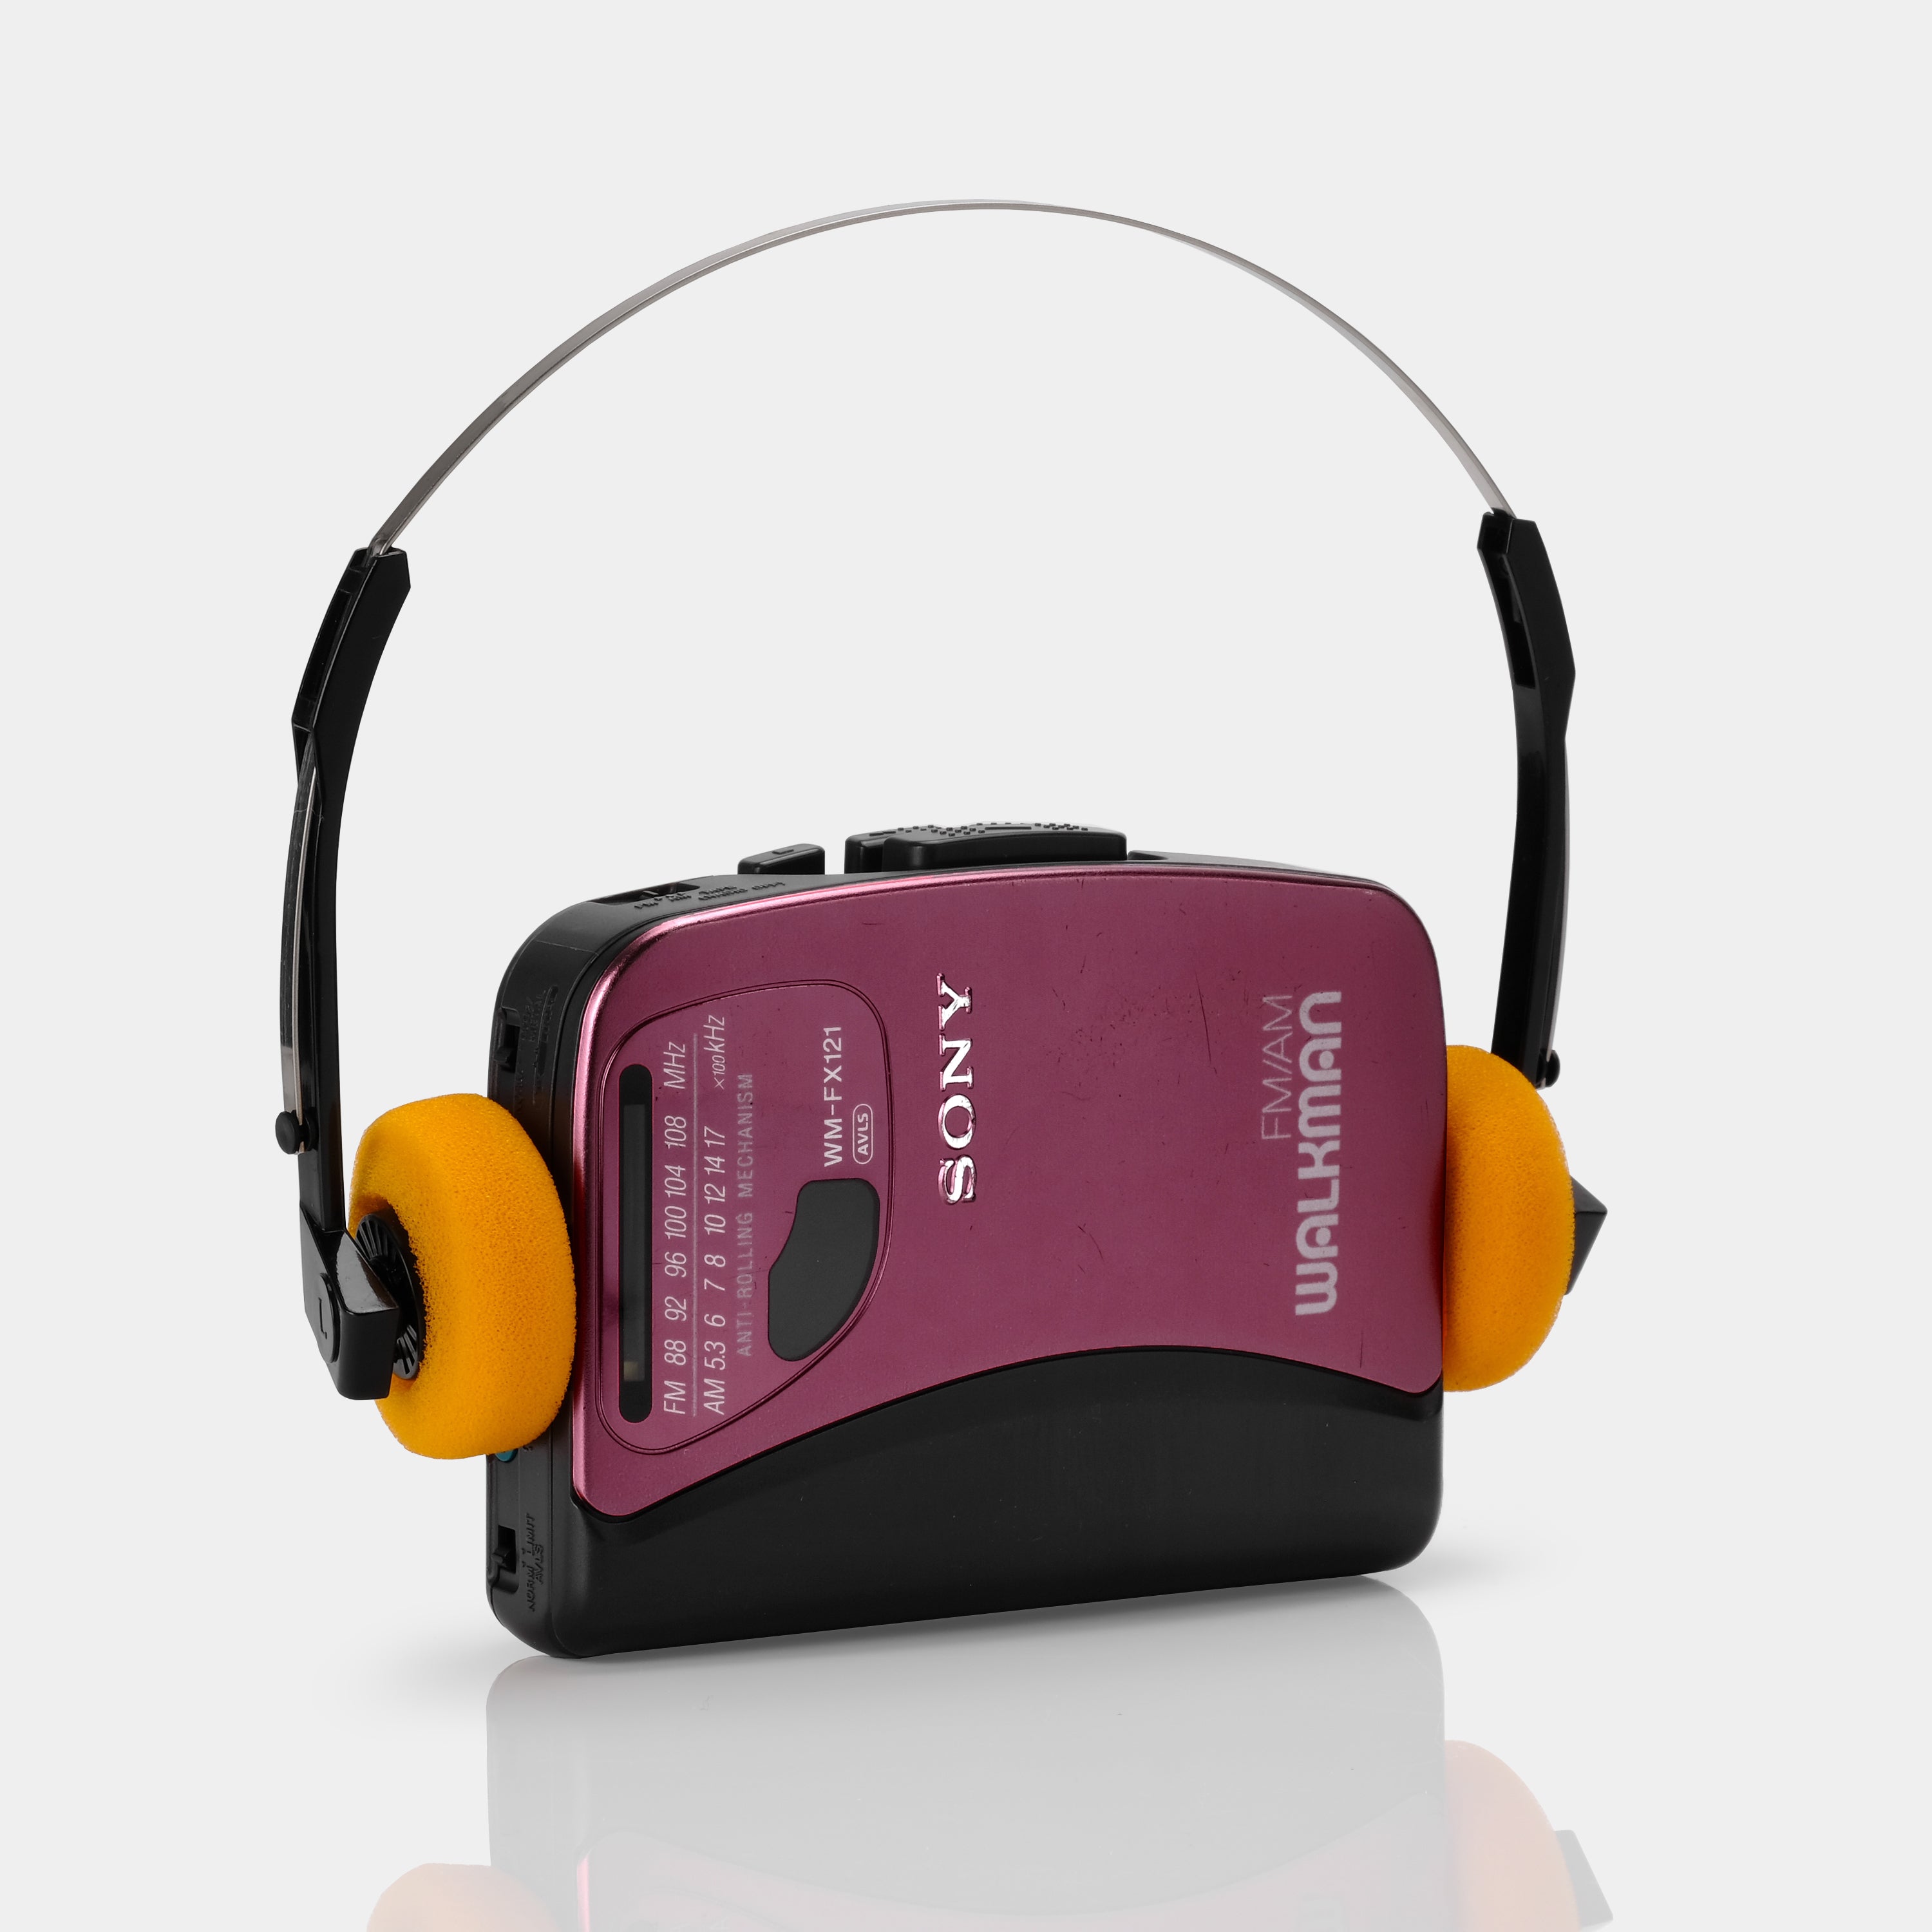 Sony Walkman WM-FX121 AM/FM Fuschia Portable Cassette Player